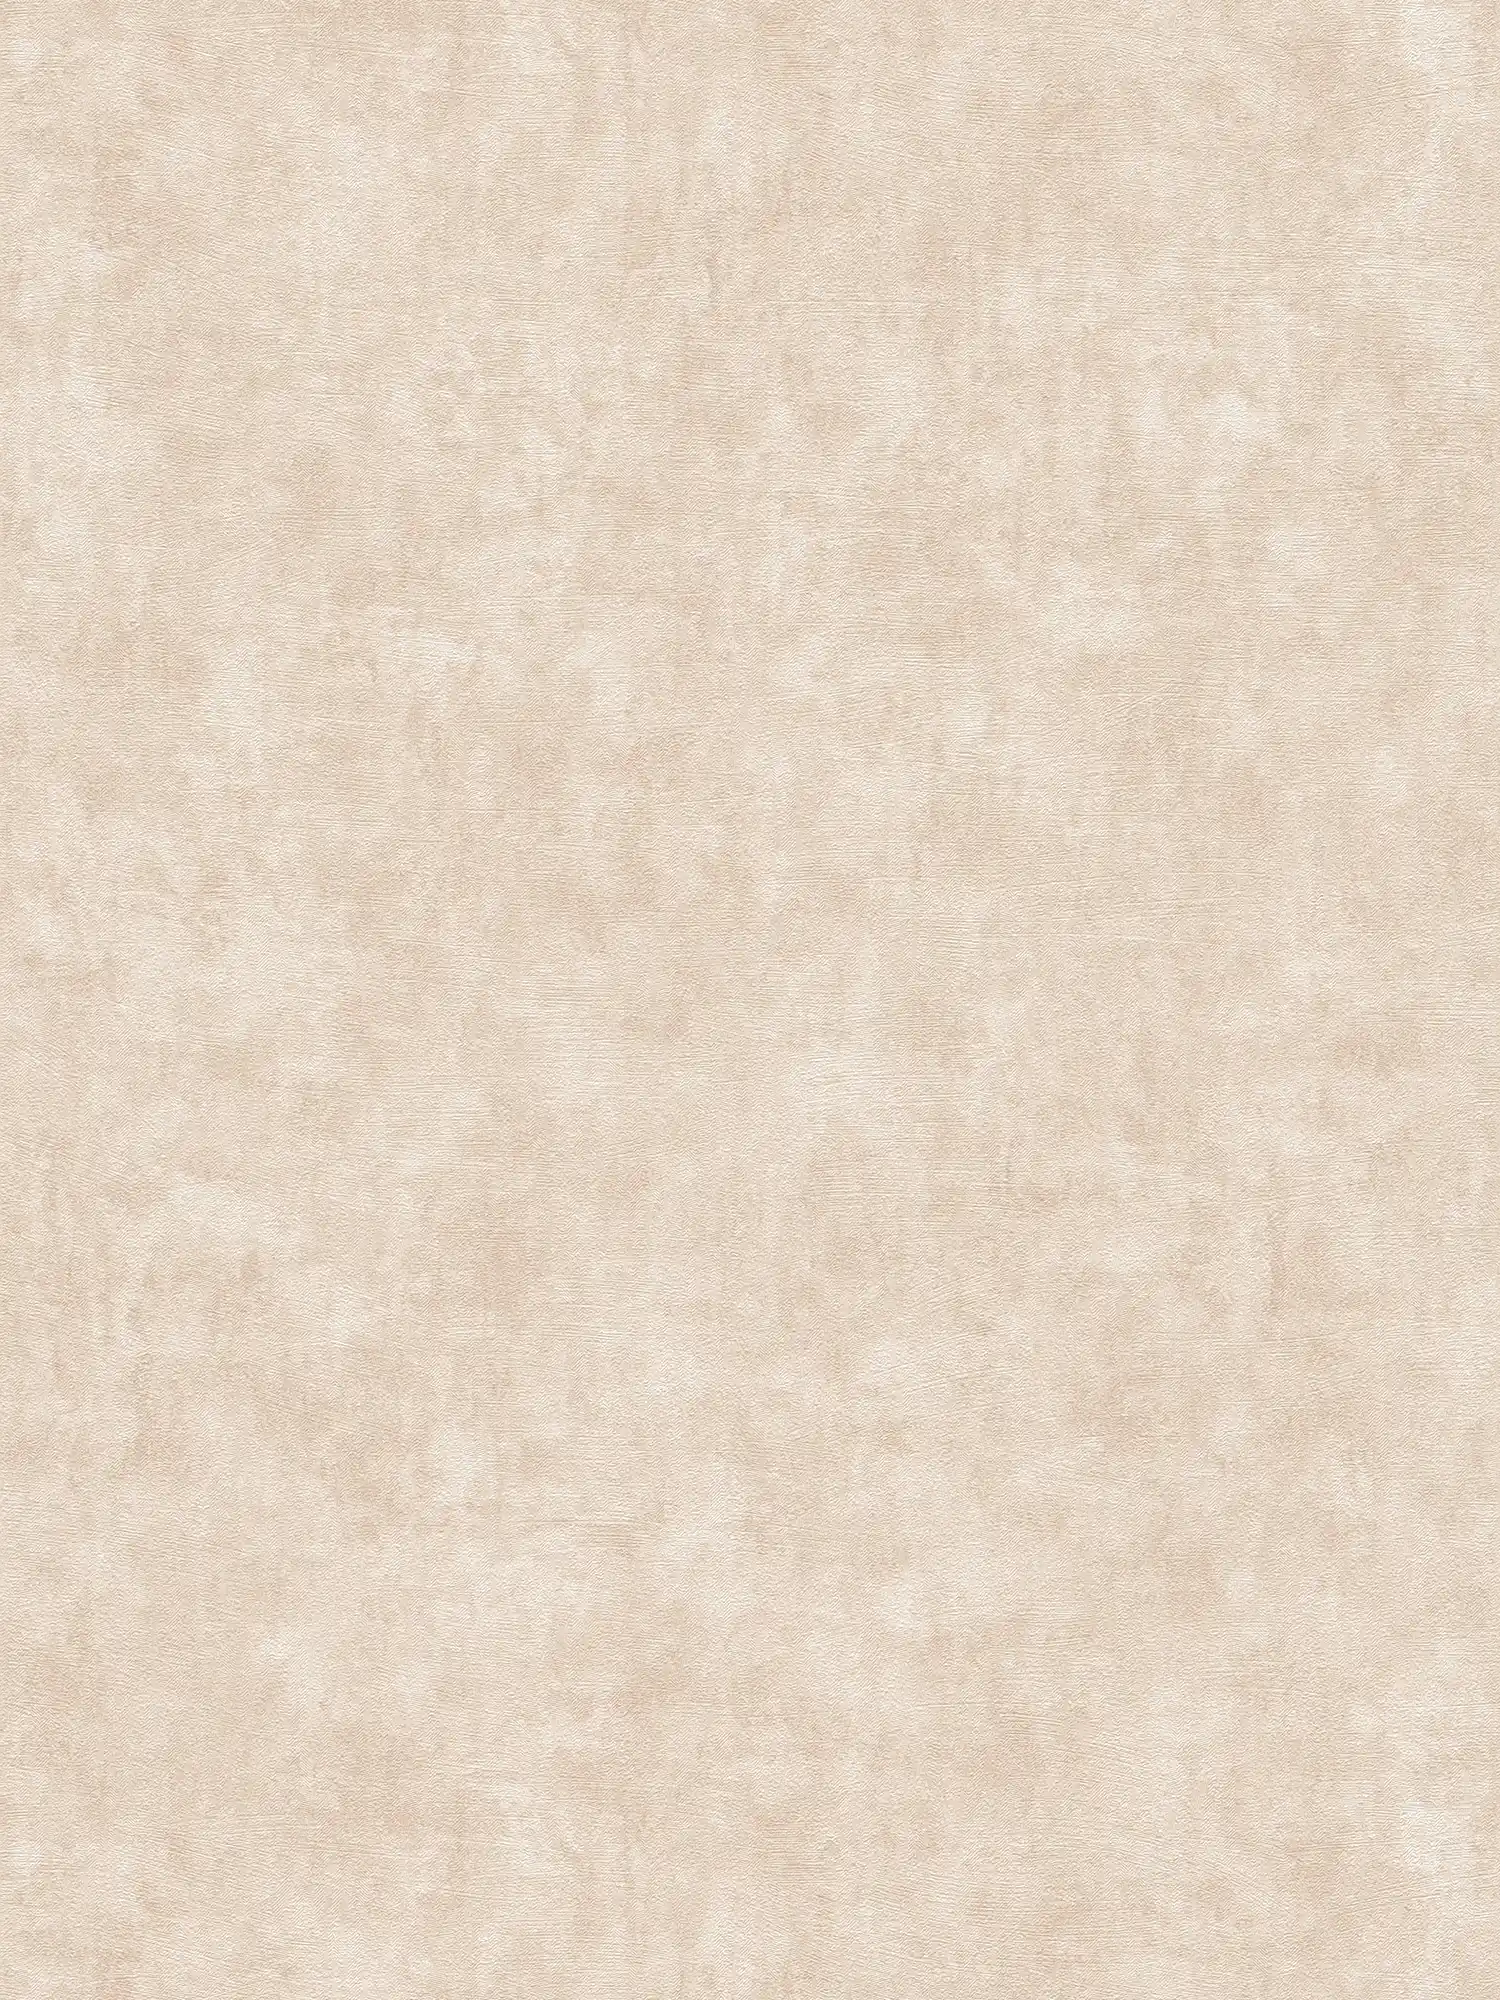 Non-woven wallpaper with textured pattern - beige, cream
